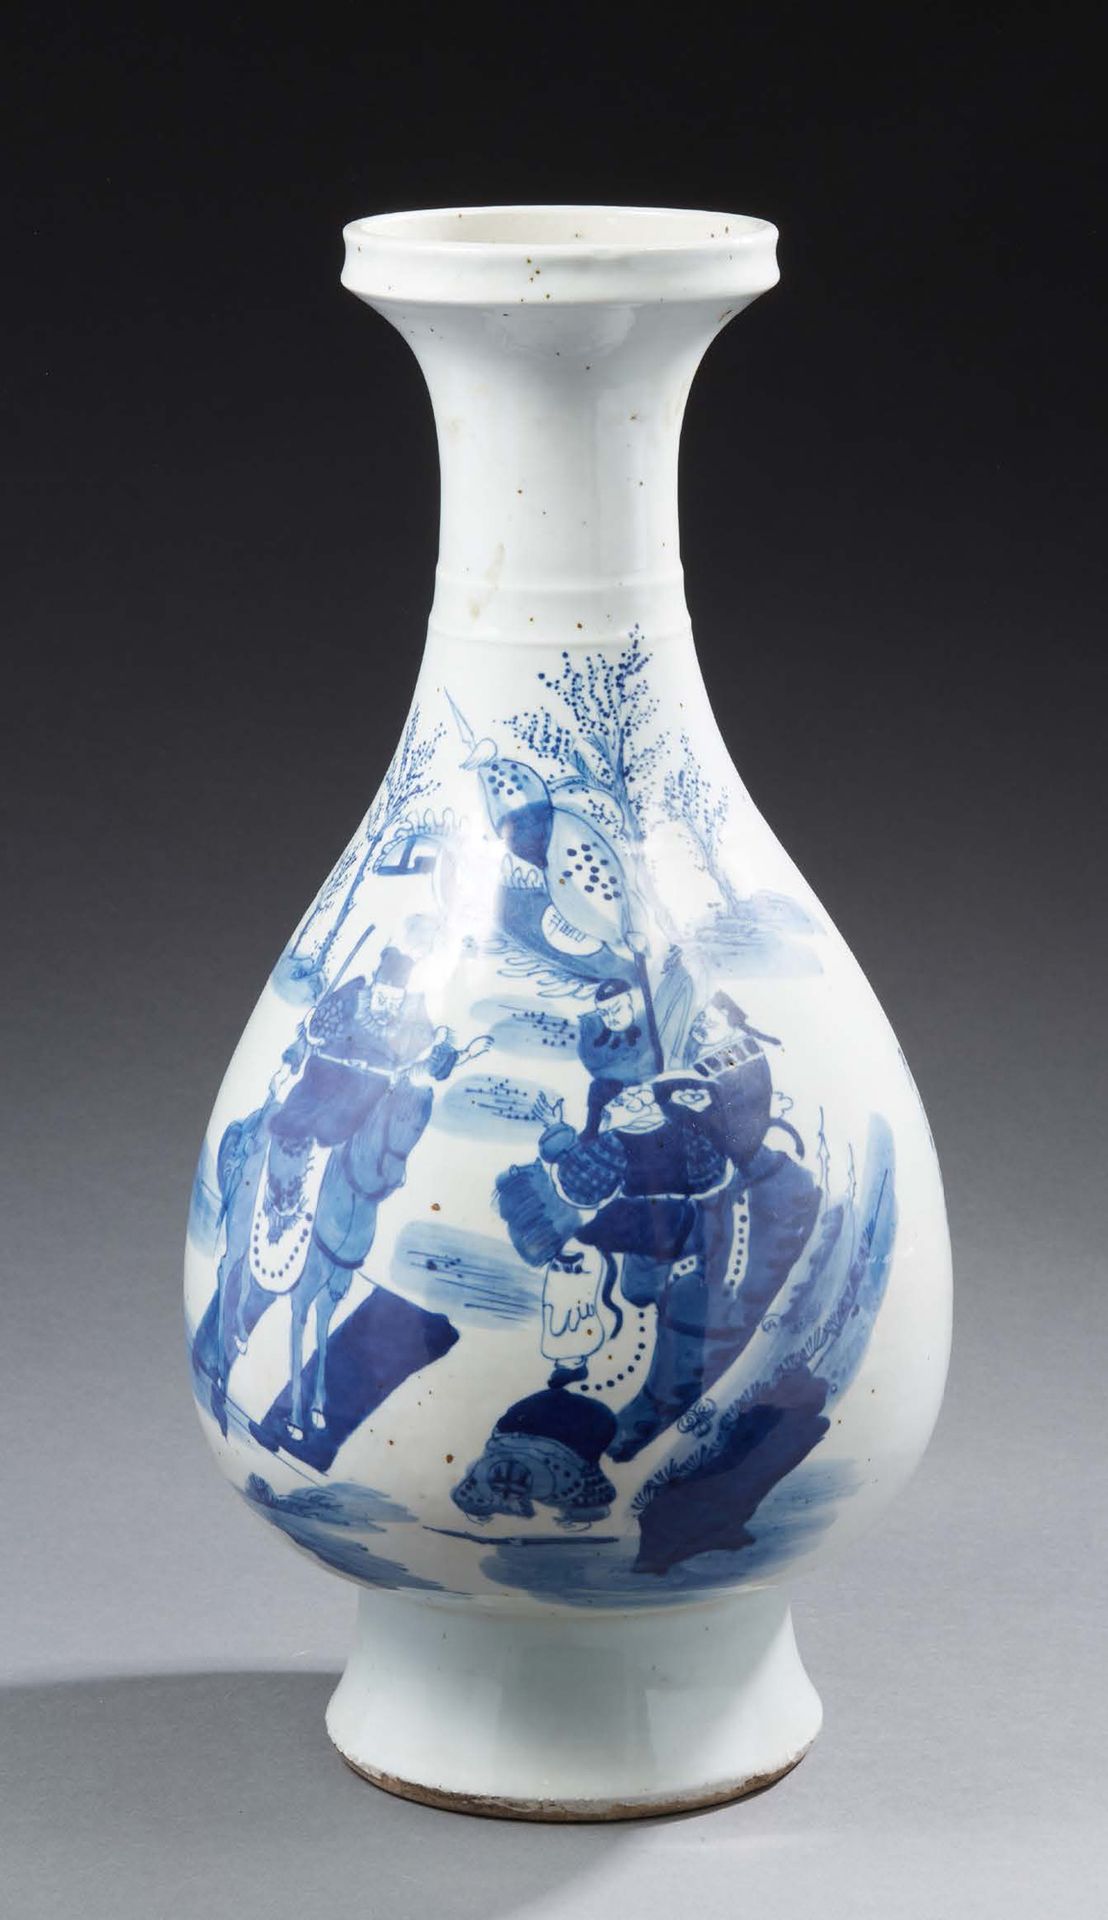 CHINE 狭长颈部的花瓶，以蓝色釉下彩装饰的风景背景上的骑士，上面有铭文
共和国时期，1912
- 1949
高：51厘米